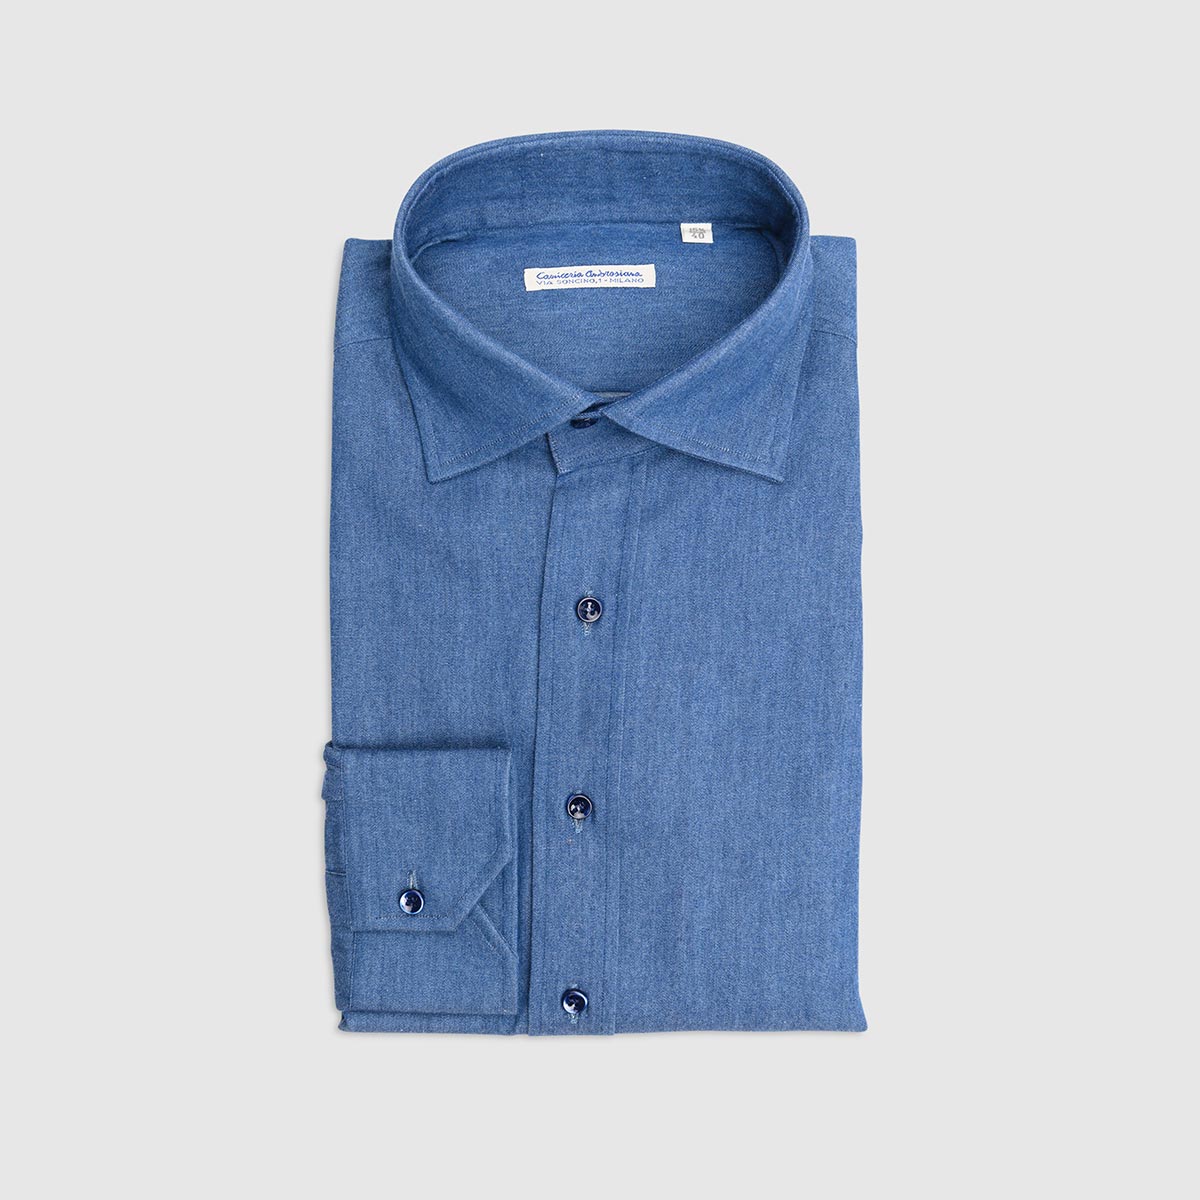 100% Double Twisted Cotton Denim Shirt – Medium Blue Wash